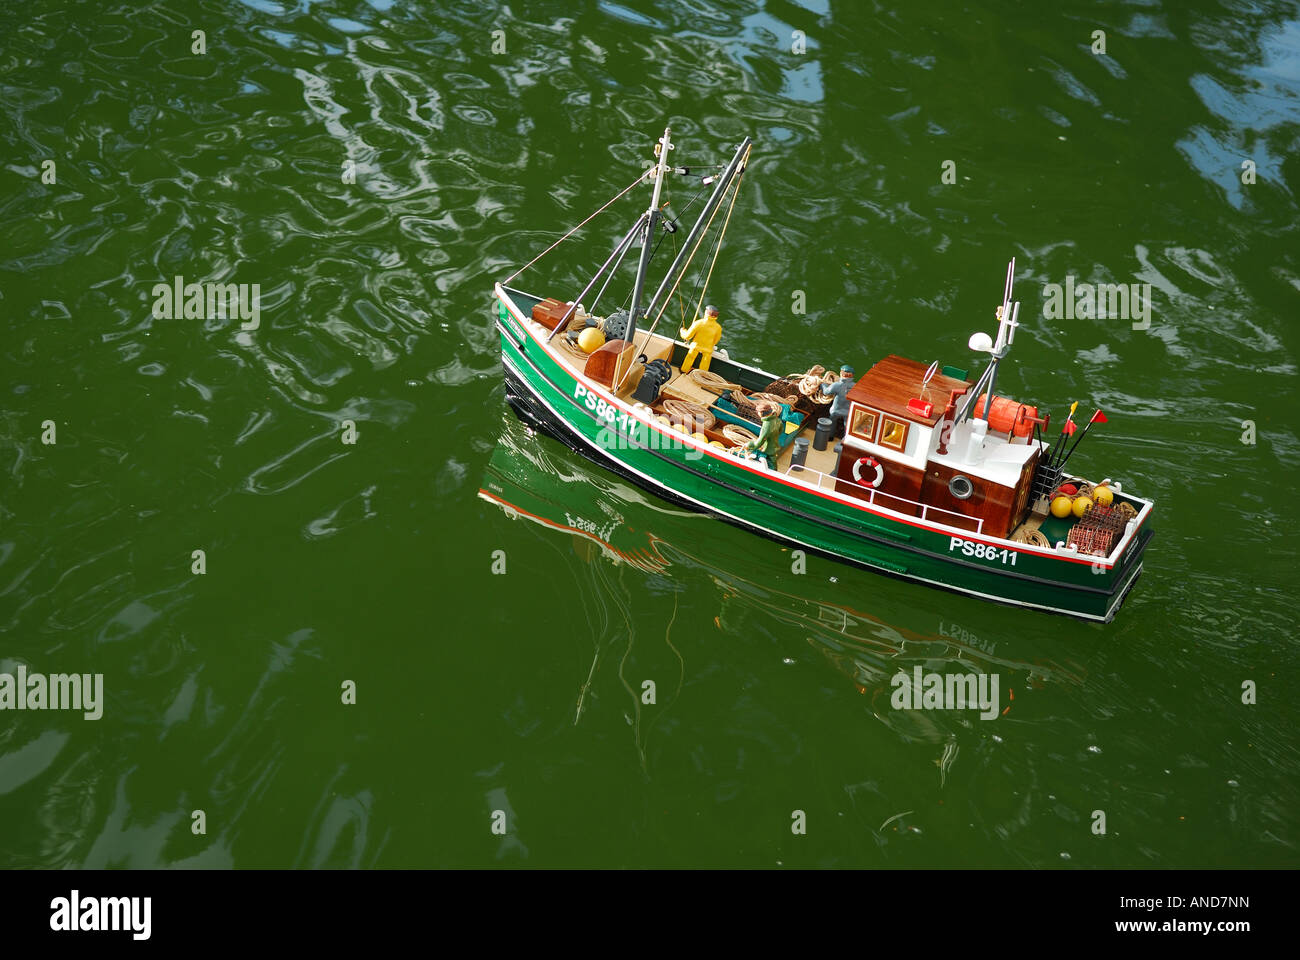 Remote control fishing boat Stock Photo - Alamy